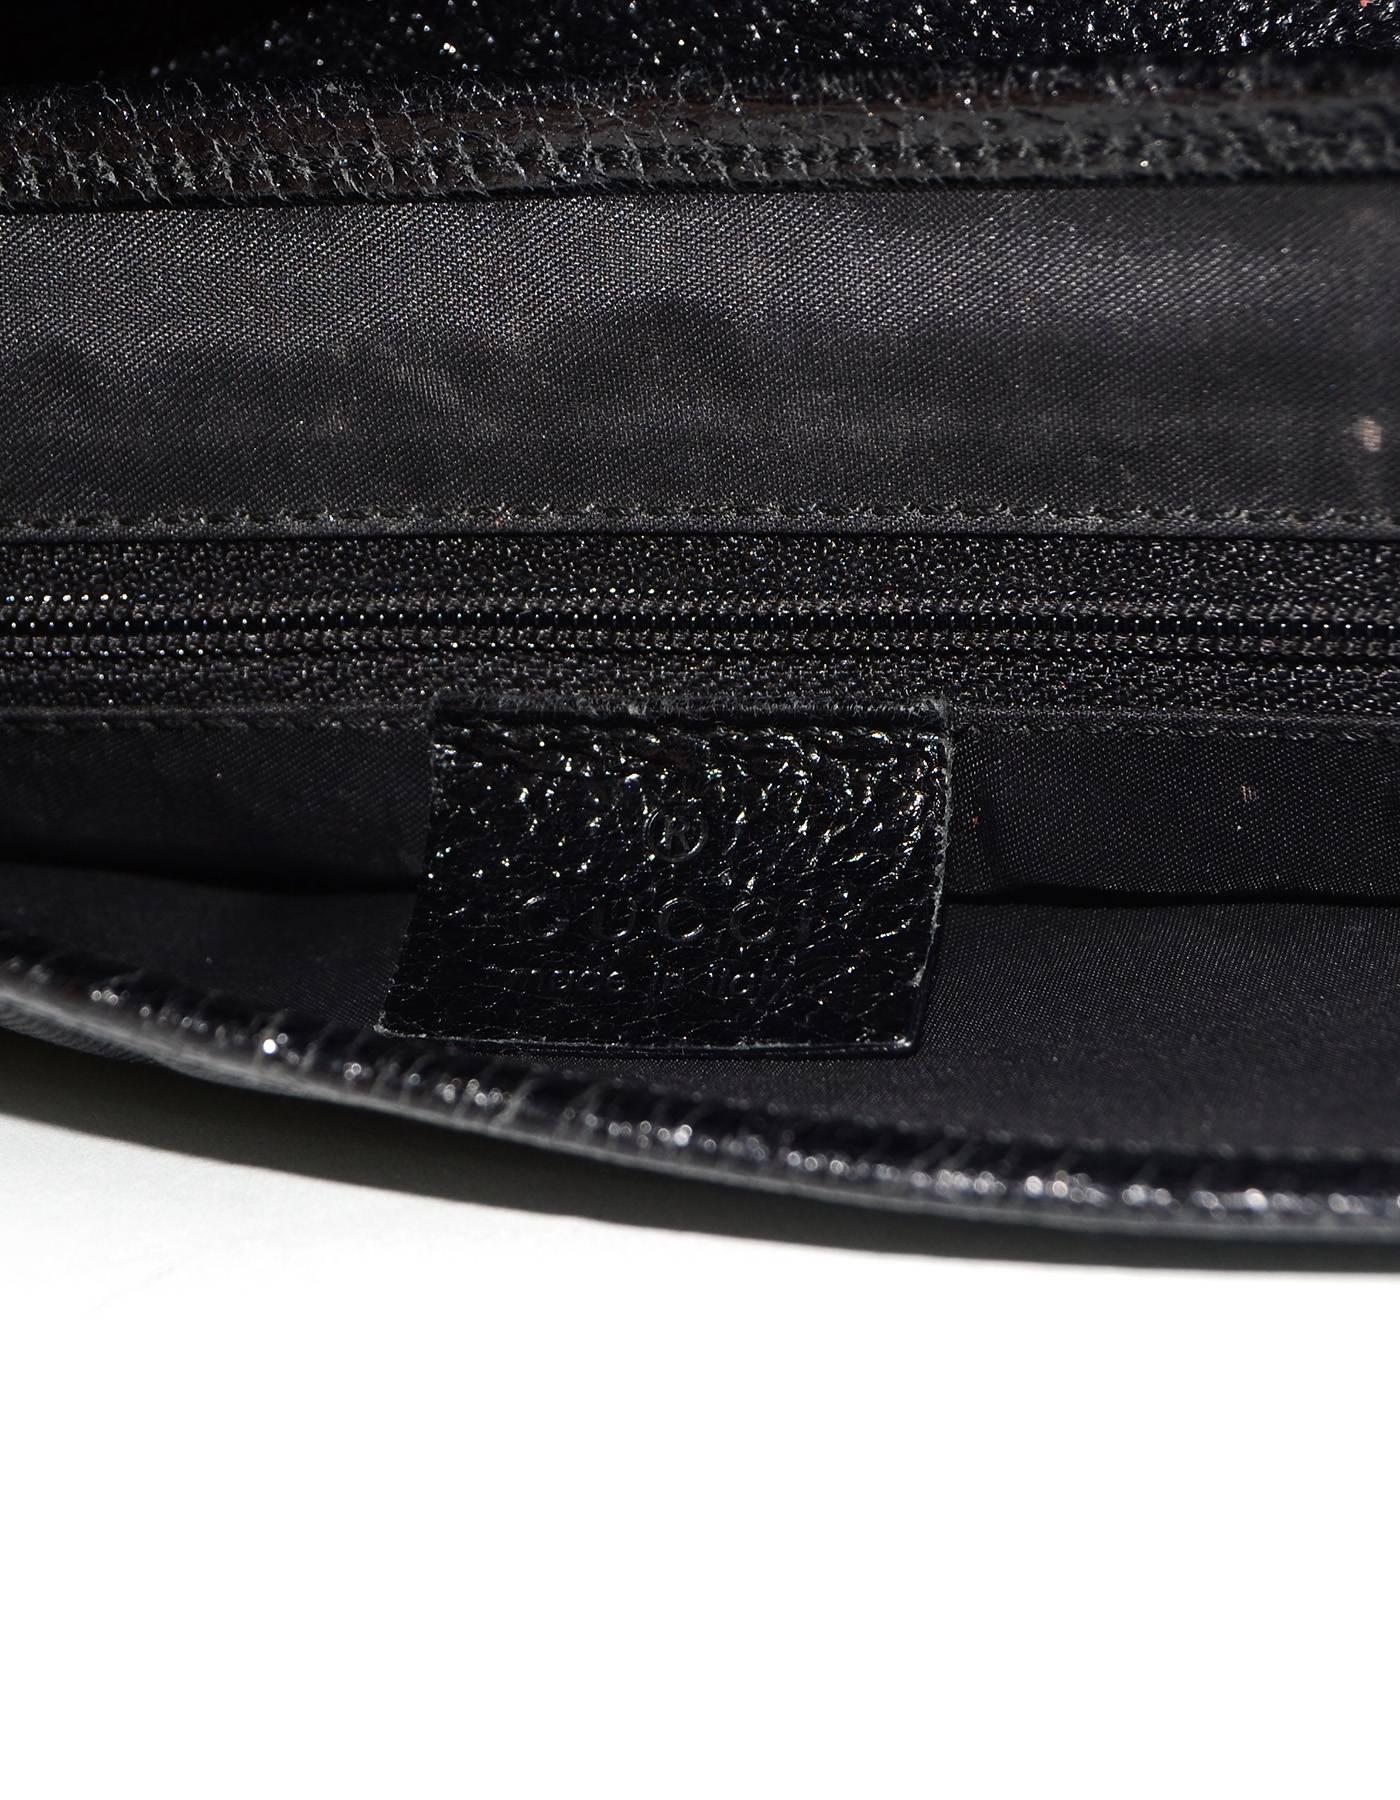 Gucci Black Leather and Nylon Jackie-O Bag 4